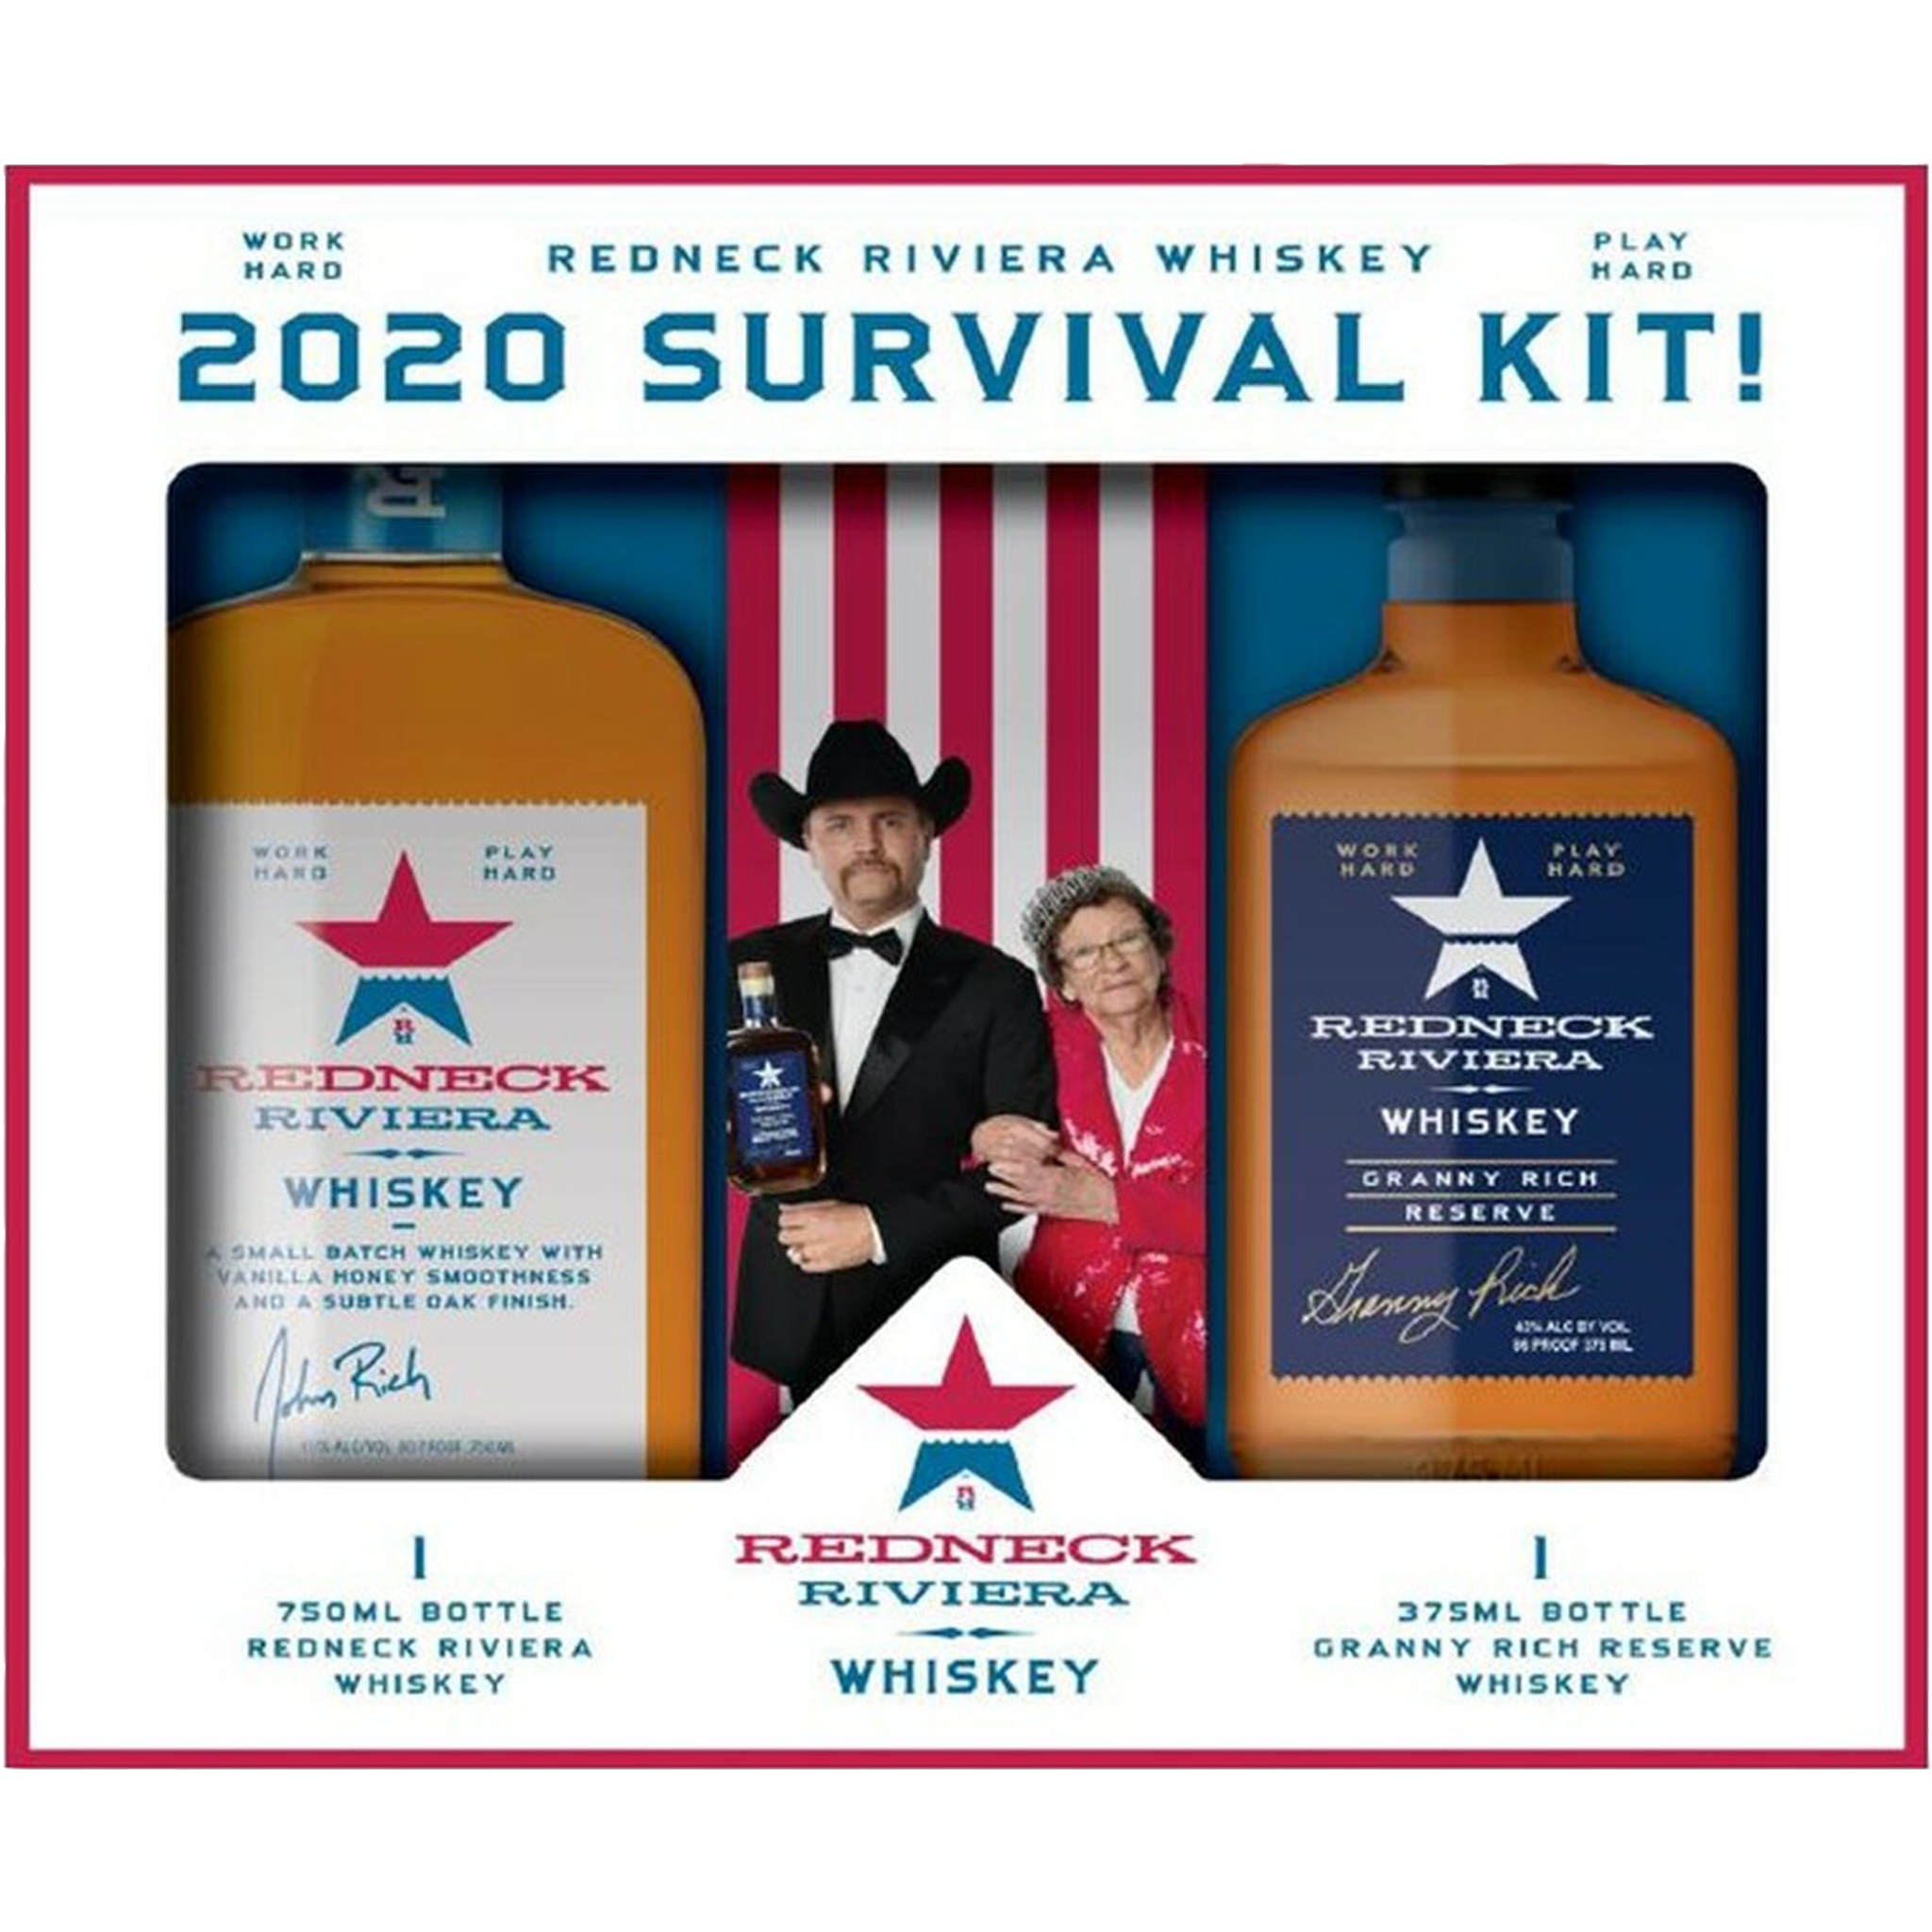 Redneck Riviera Whiskey 2020 Survival Kit